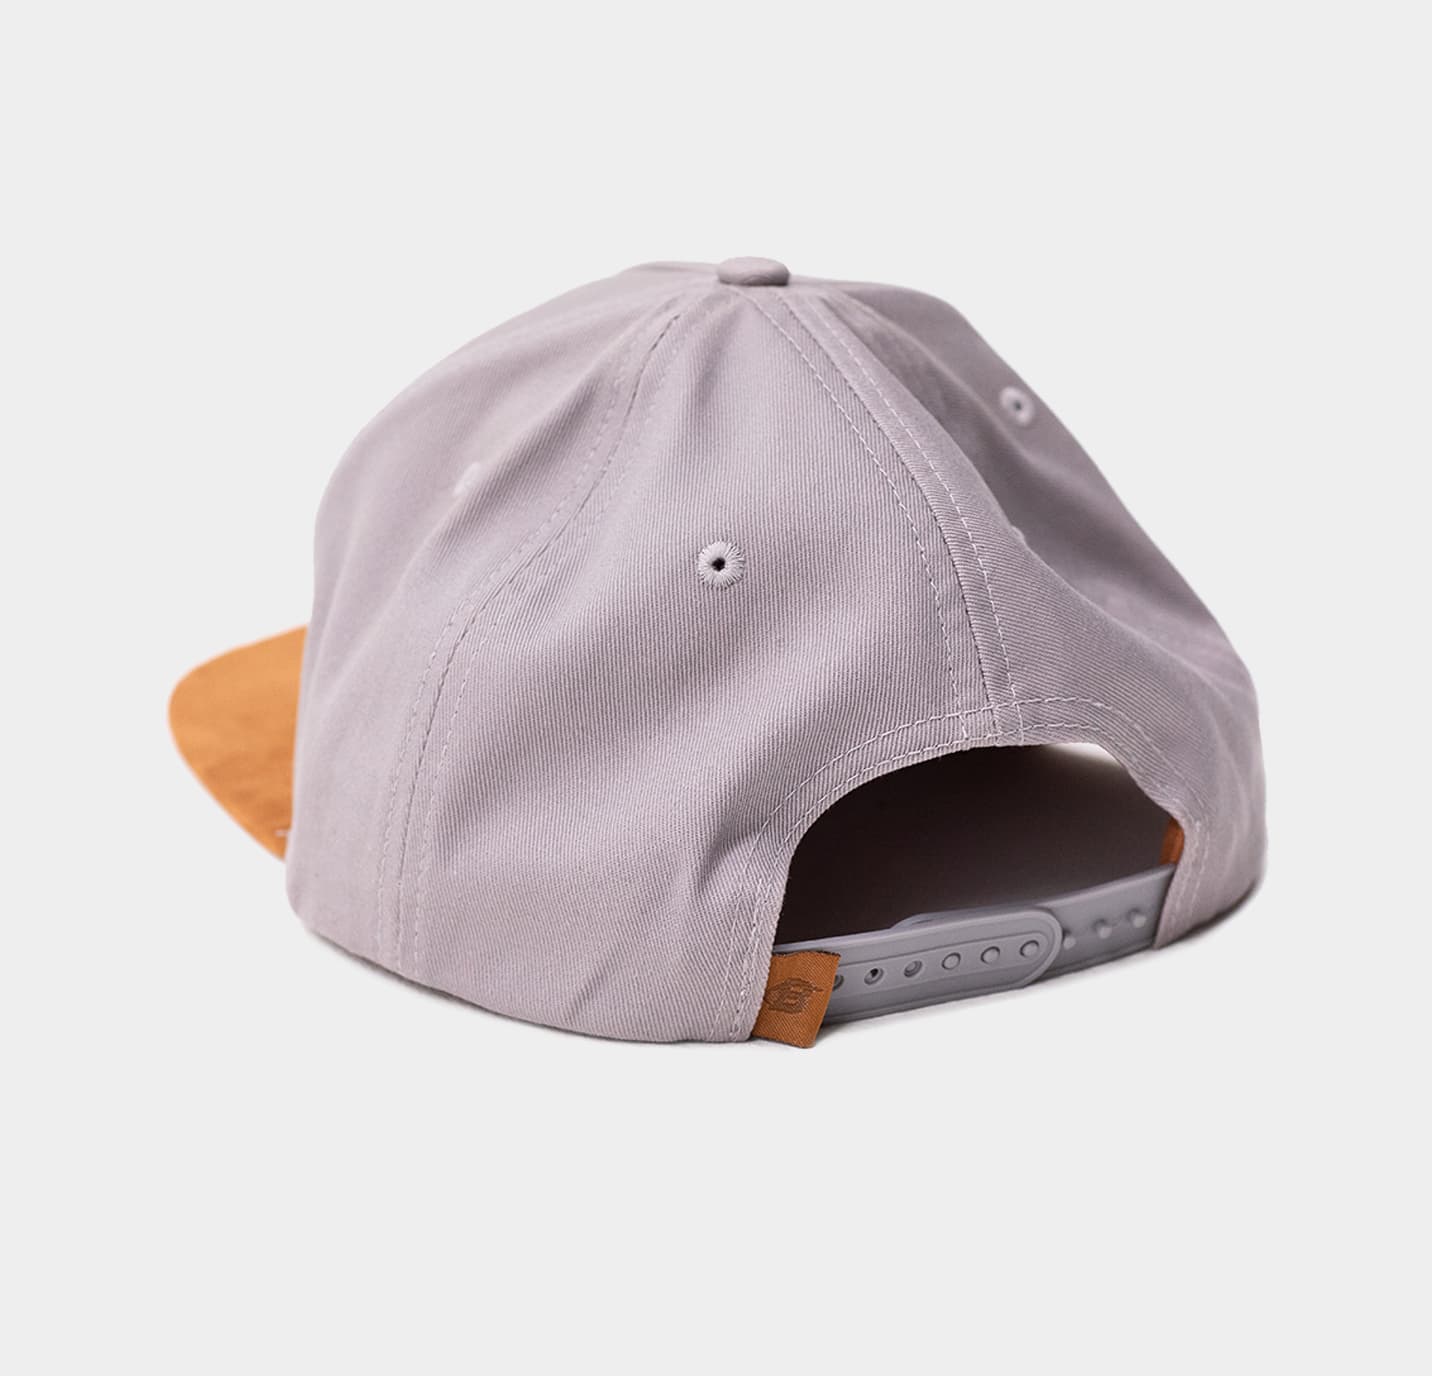 BBcom Premium United Snapback Hat, Grey, One Size A3